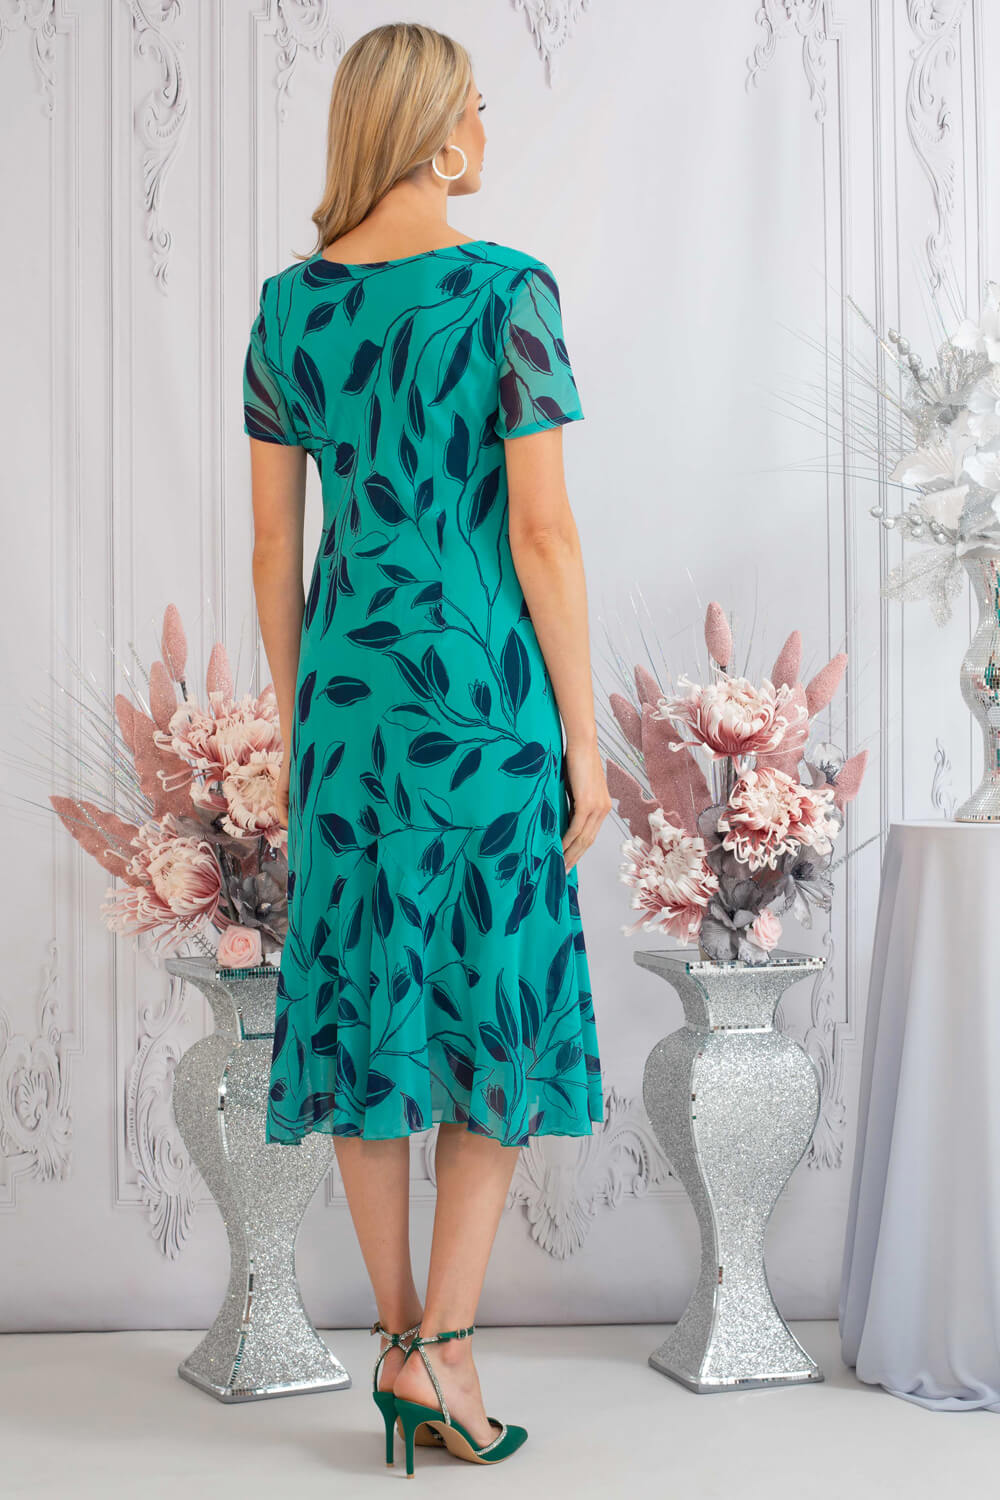 Jade Julianna Floral Print Chiffon Dress, Image 3 of 4